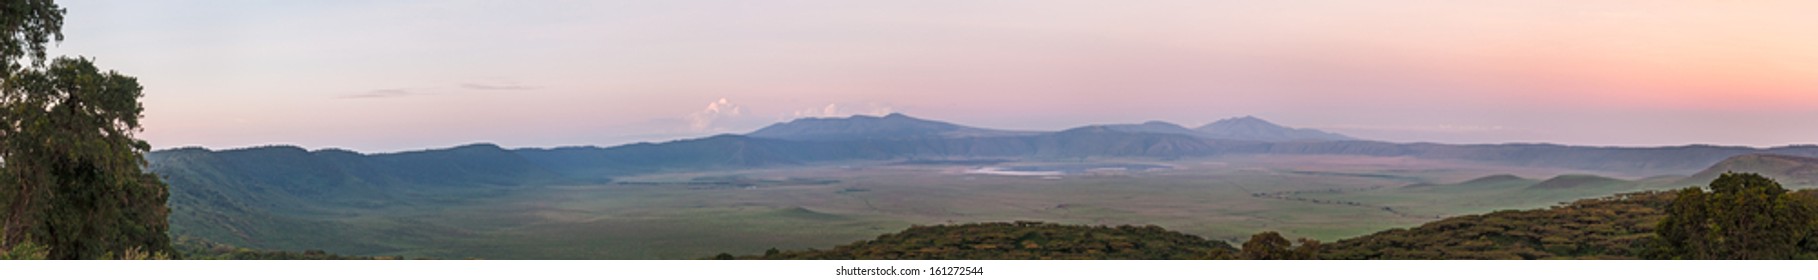 Panoramic view of huge Ngorongoro caldera (extinct volcano crater) against sunrise glow background. Great Rift Valley, Tanzania, East Africa.  